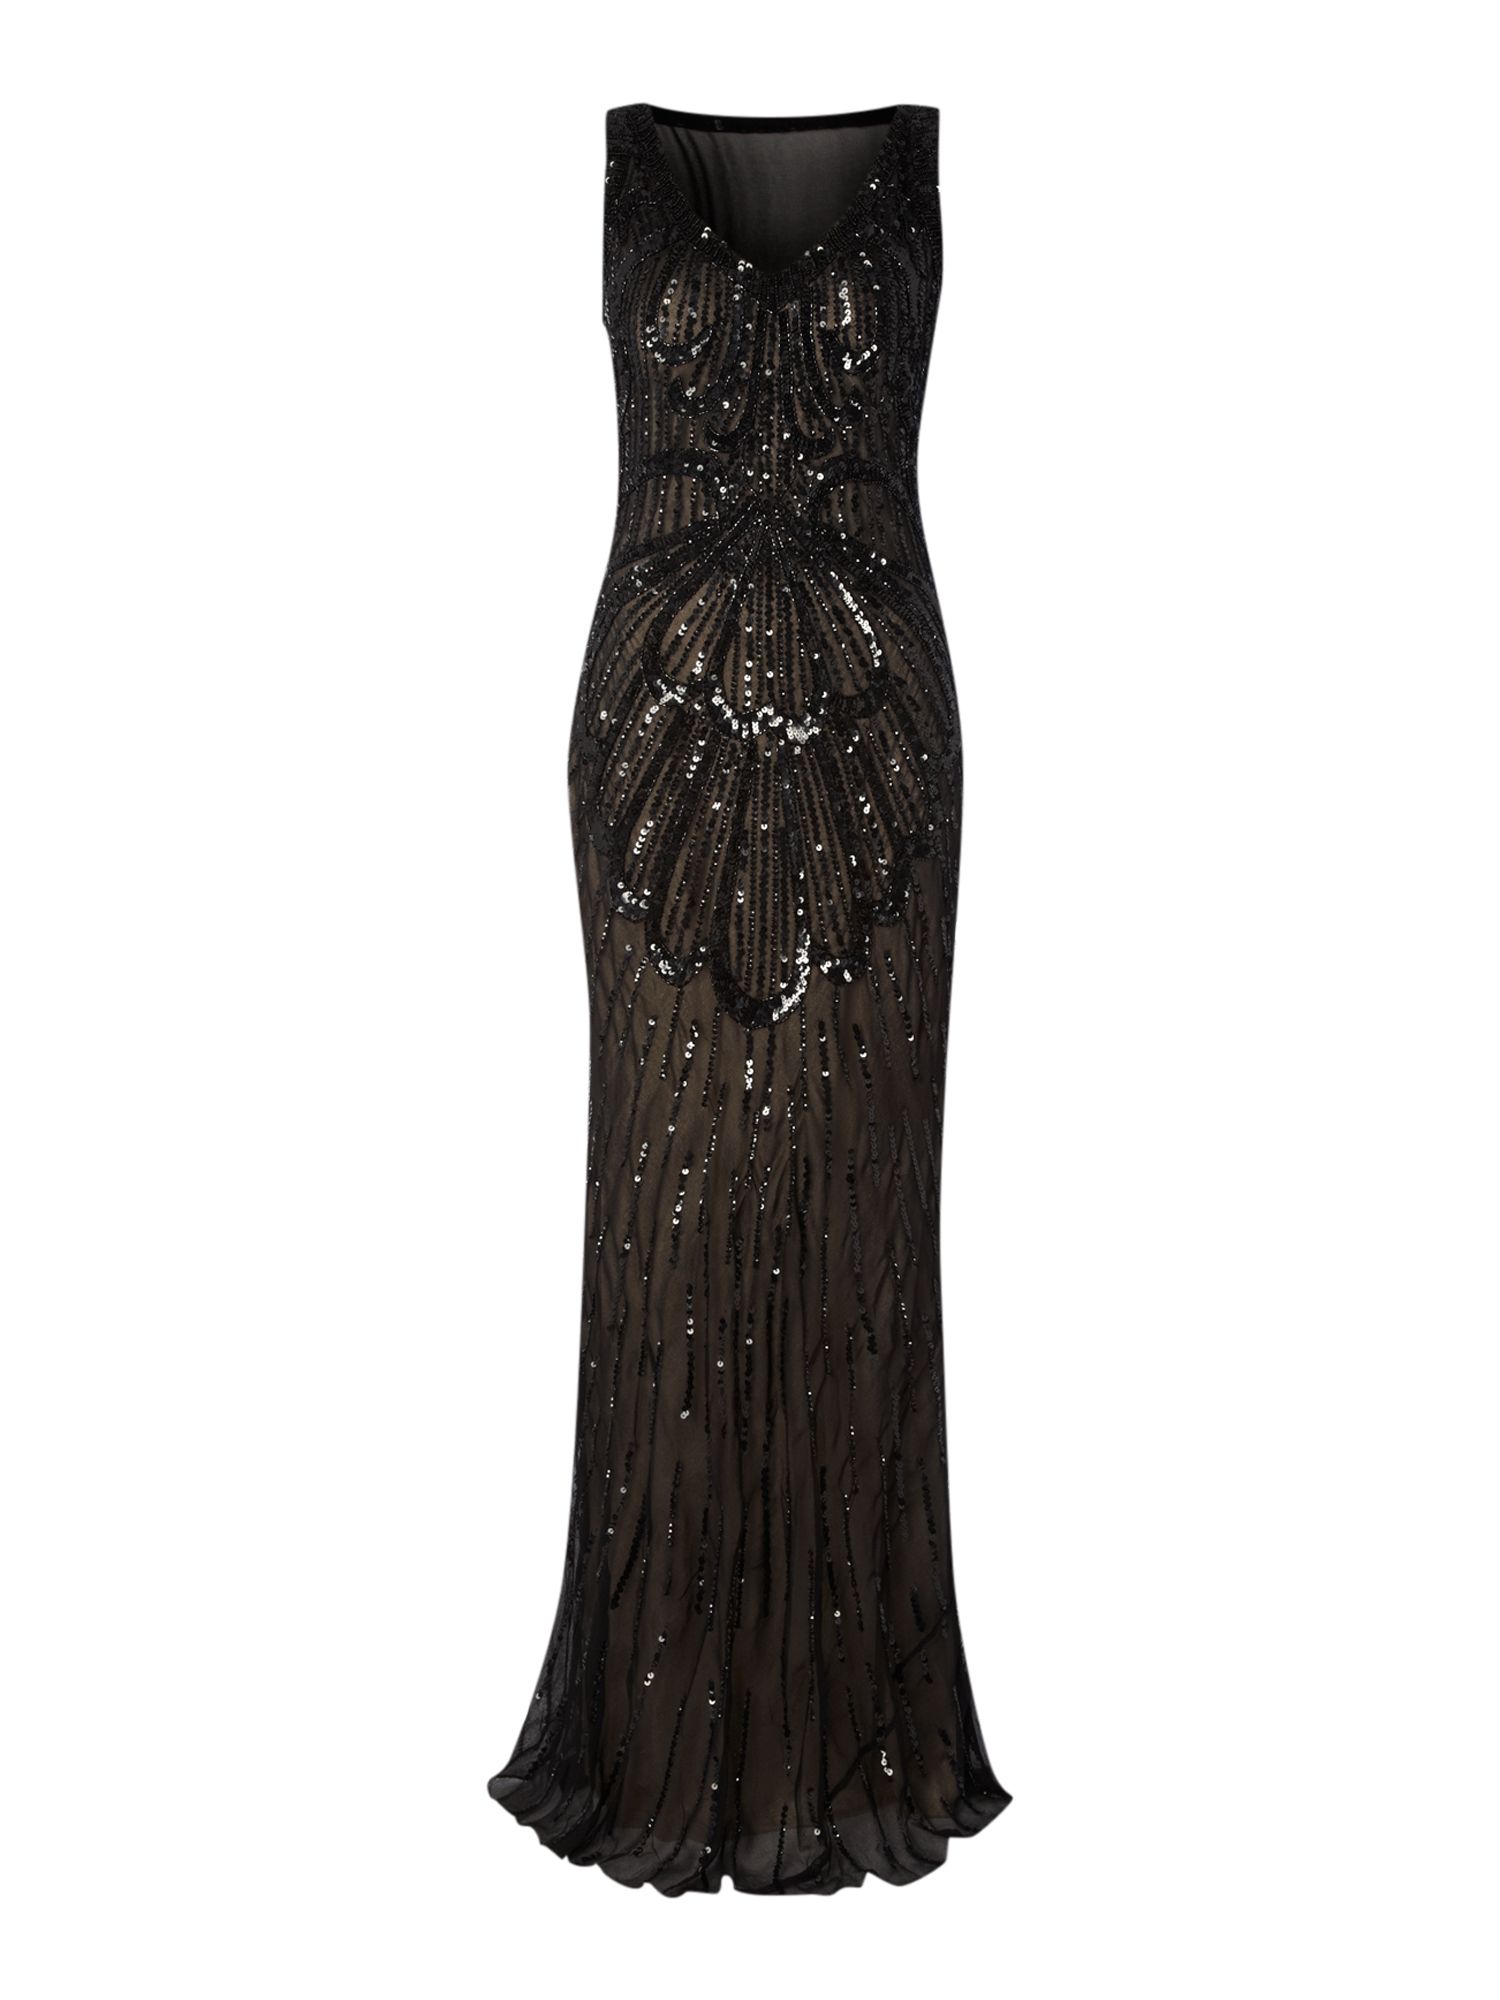 Js Collections Embellished Fan Detail Dress in Black | Lyst